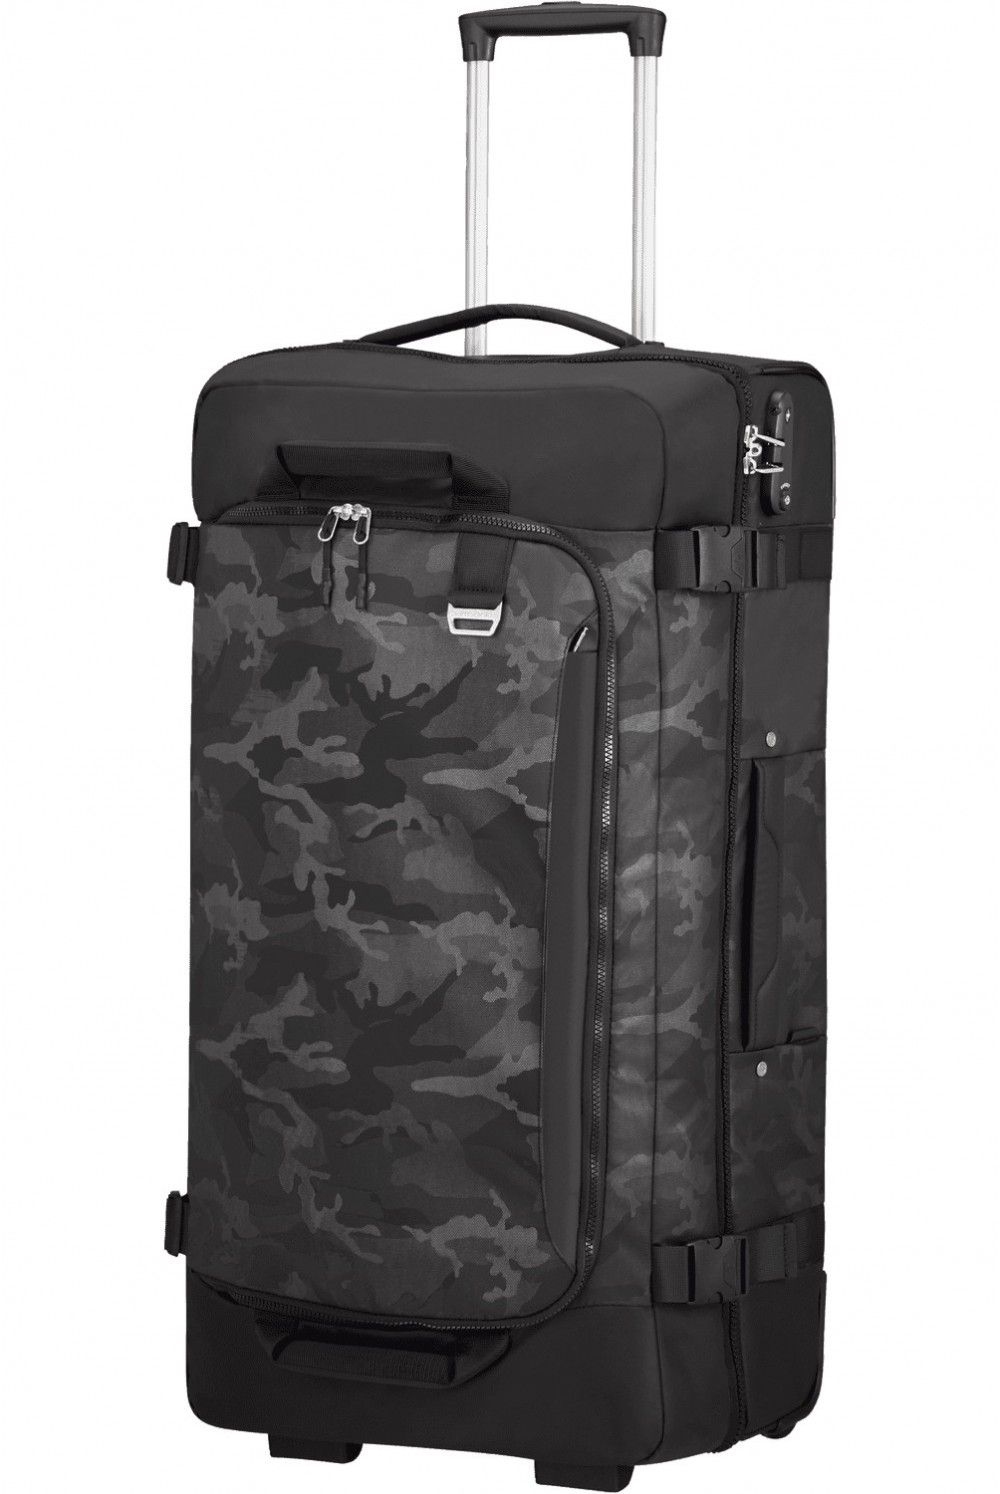 Samsonite Midtown 79cm travel bag with wheels